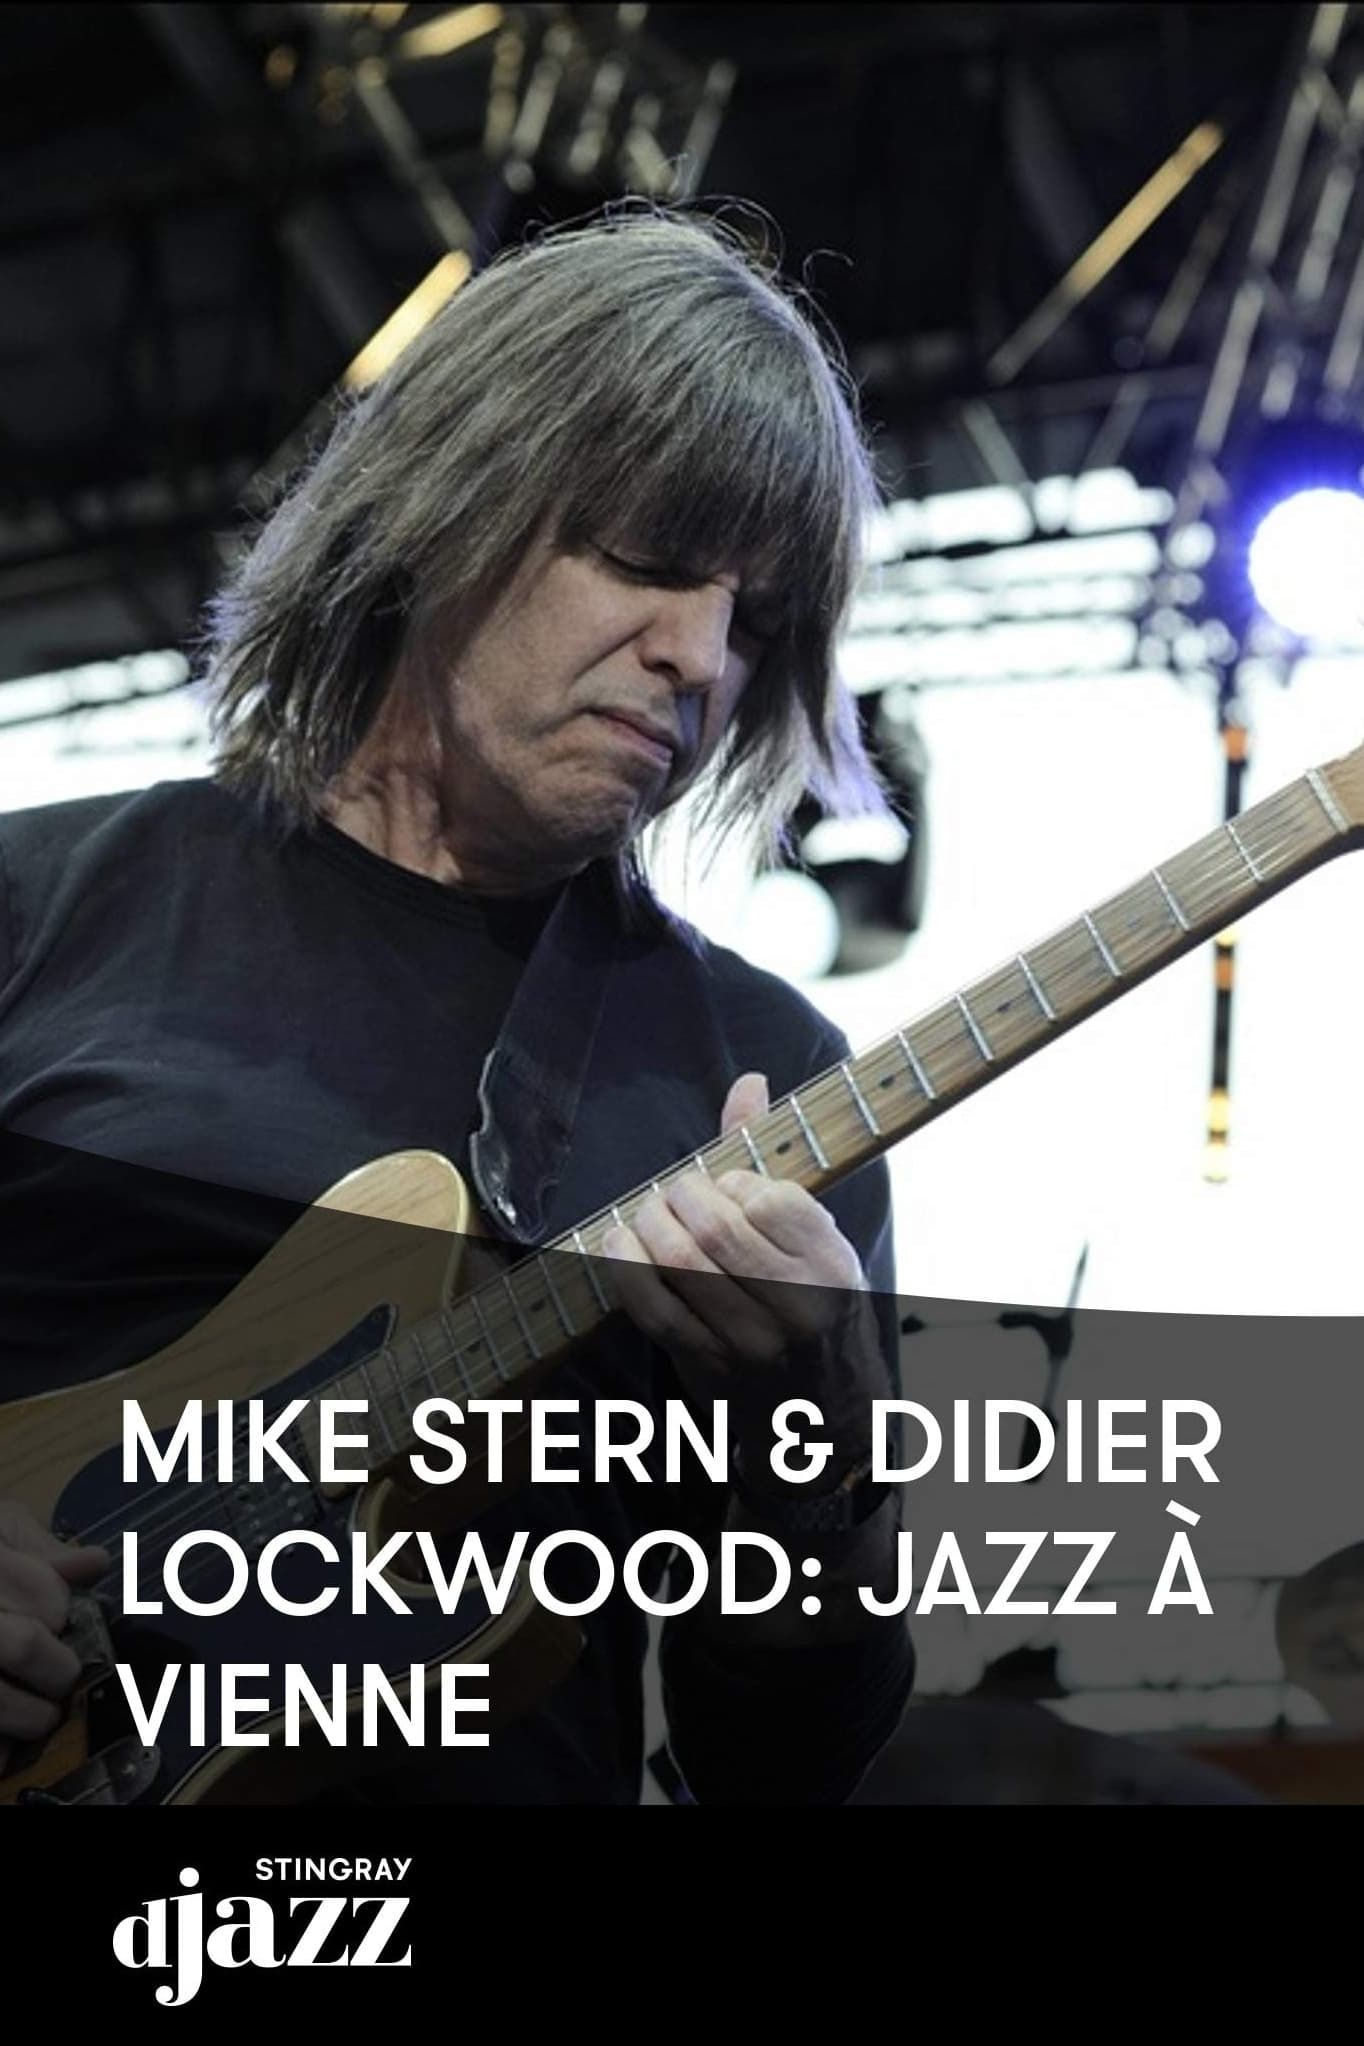 Mike Stern & Didier Lockwood 4tet - Jazz A Vienne